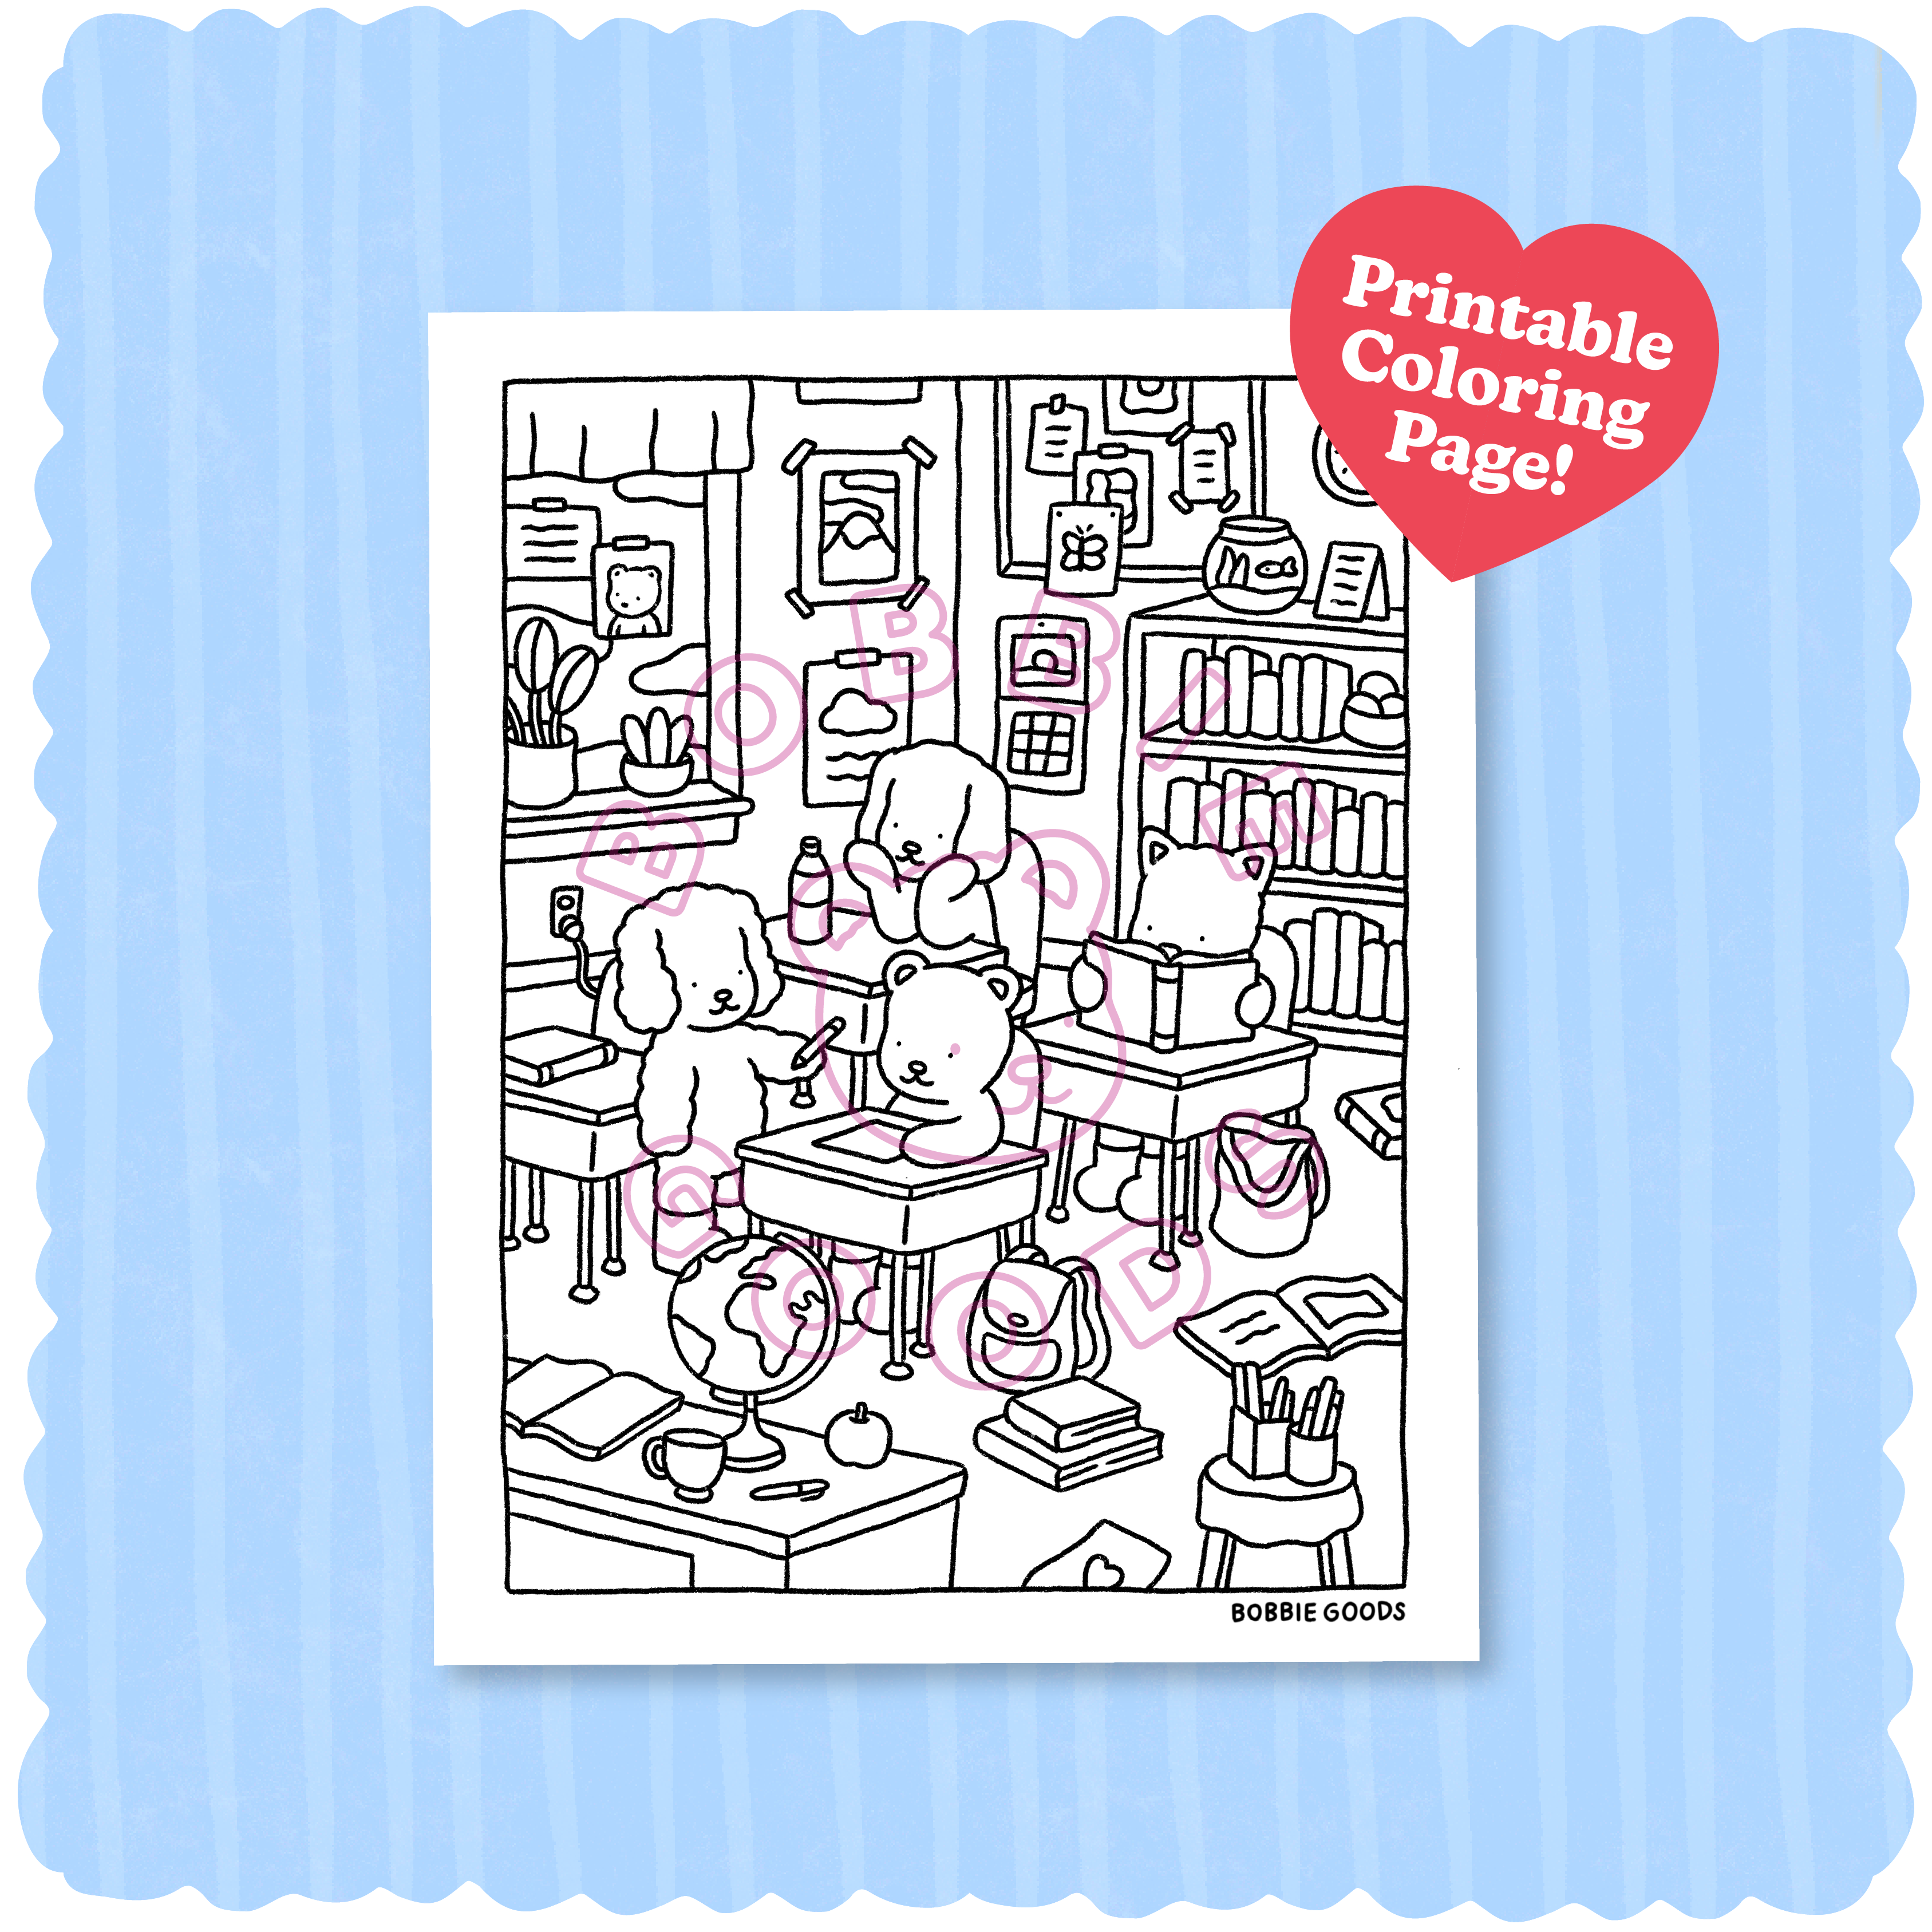 190 Bobbie goods ideas  coloring book art, cute coloring pages